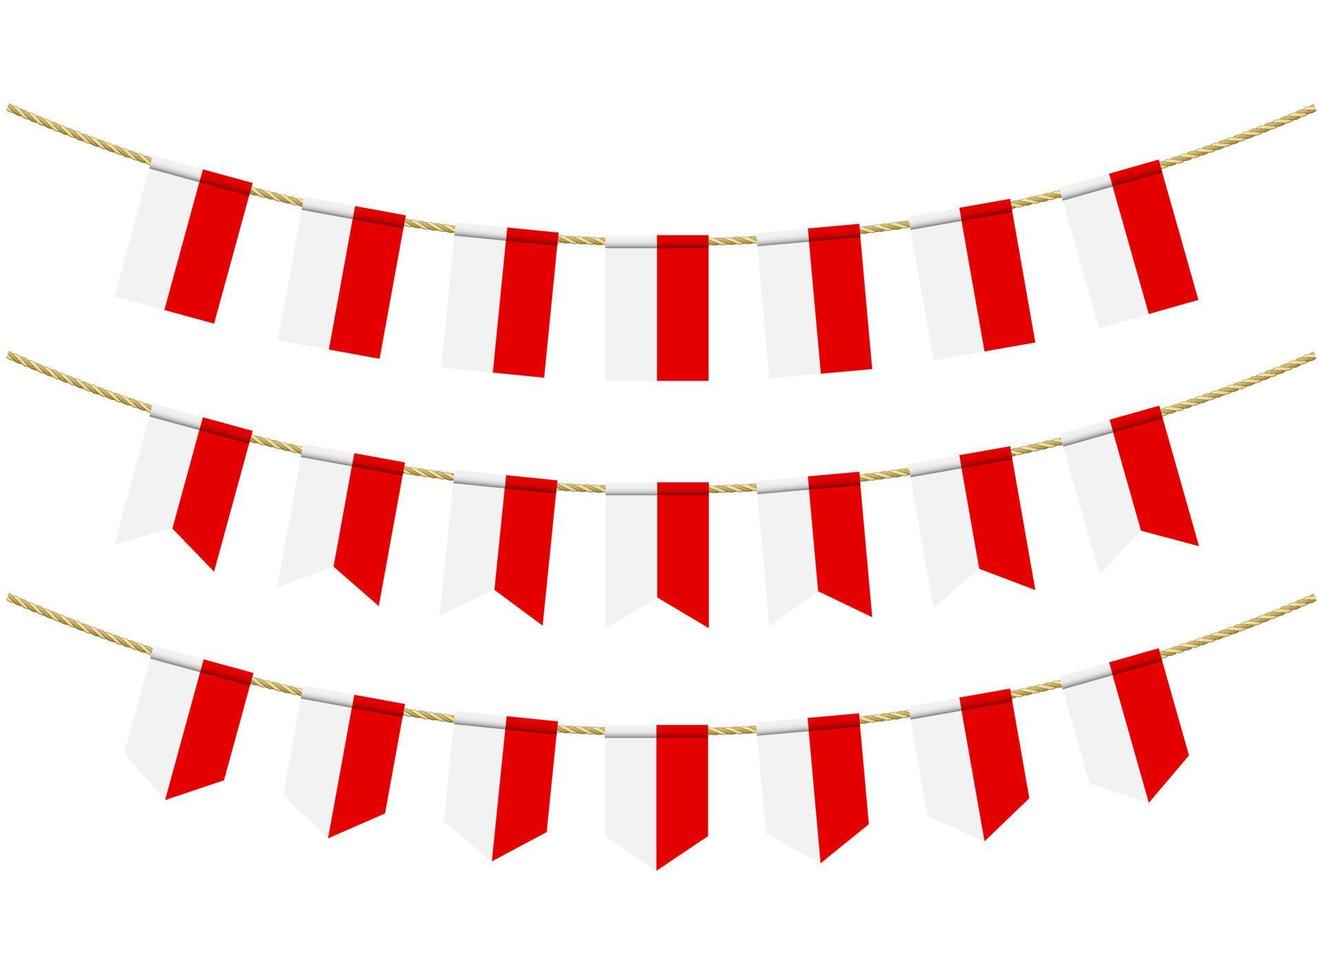 bandeira da indonésia nas cordas em fundo branco. conjunto de bandeiras de estamenha patriótica. decoração de estamenha da bandeira da indonésia vetor